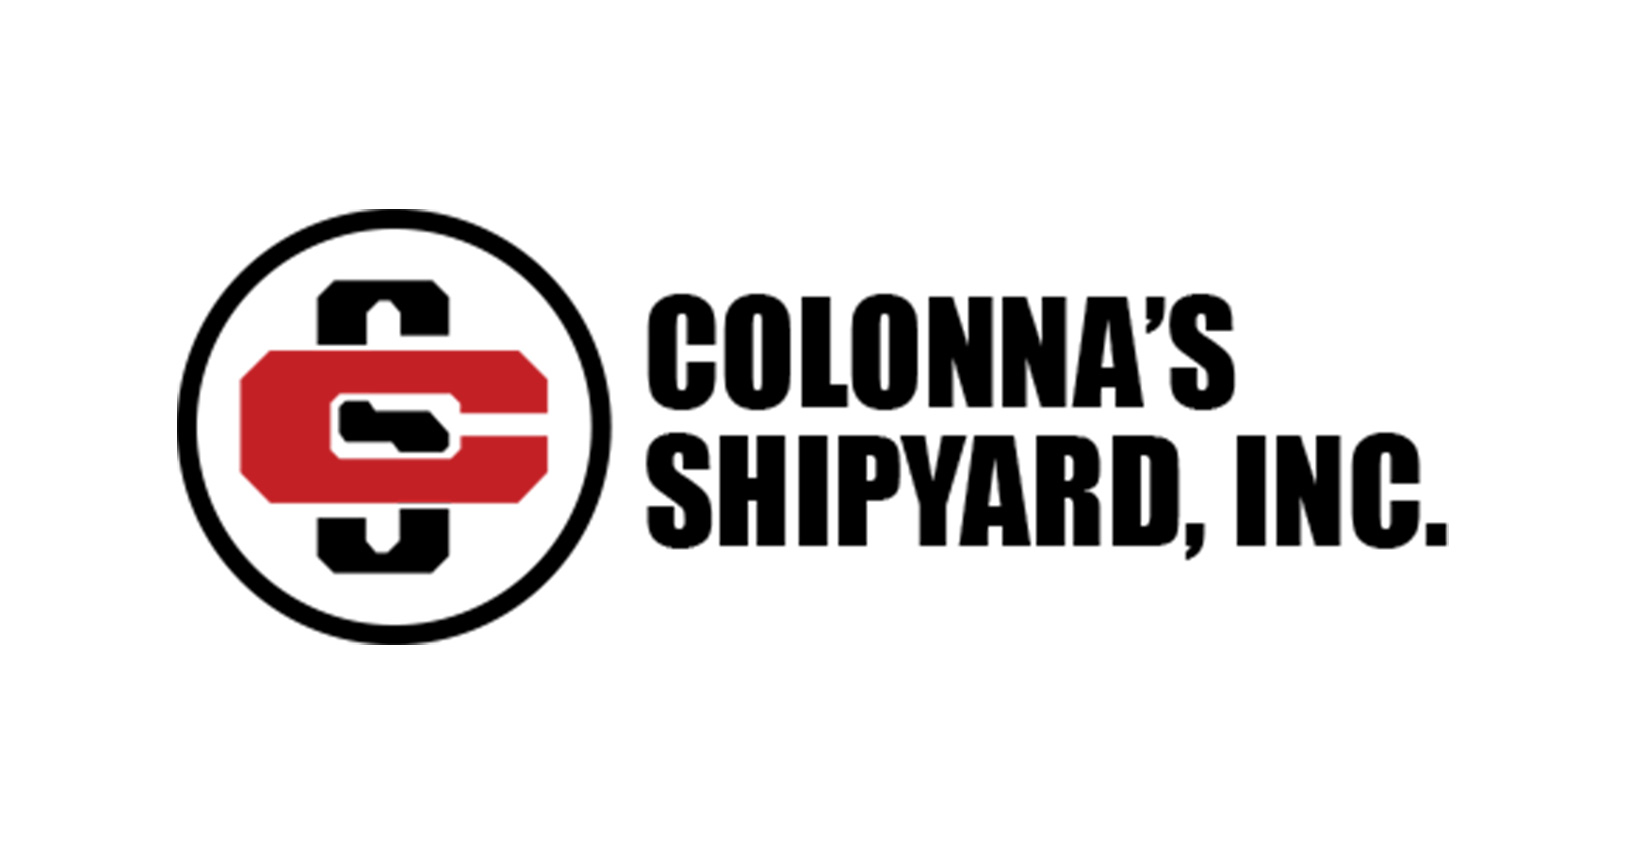 colonnas shipyard